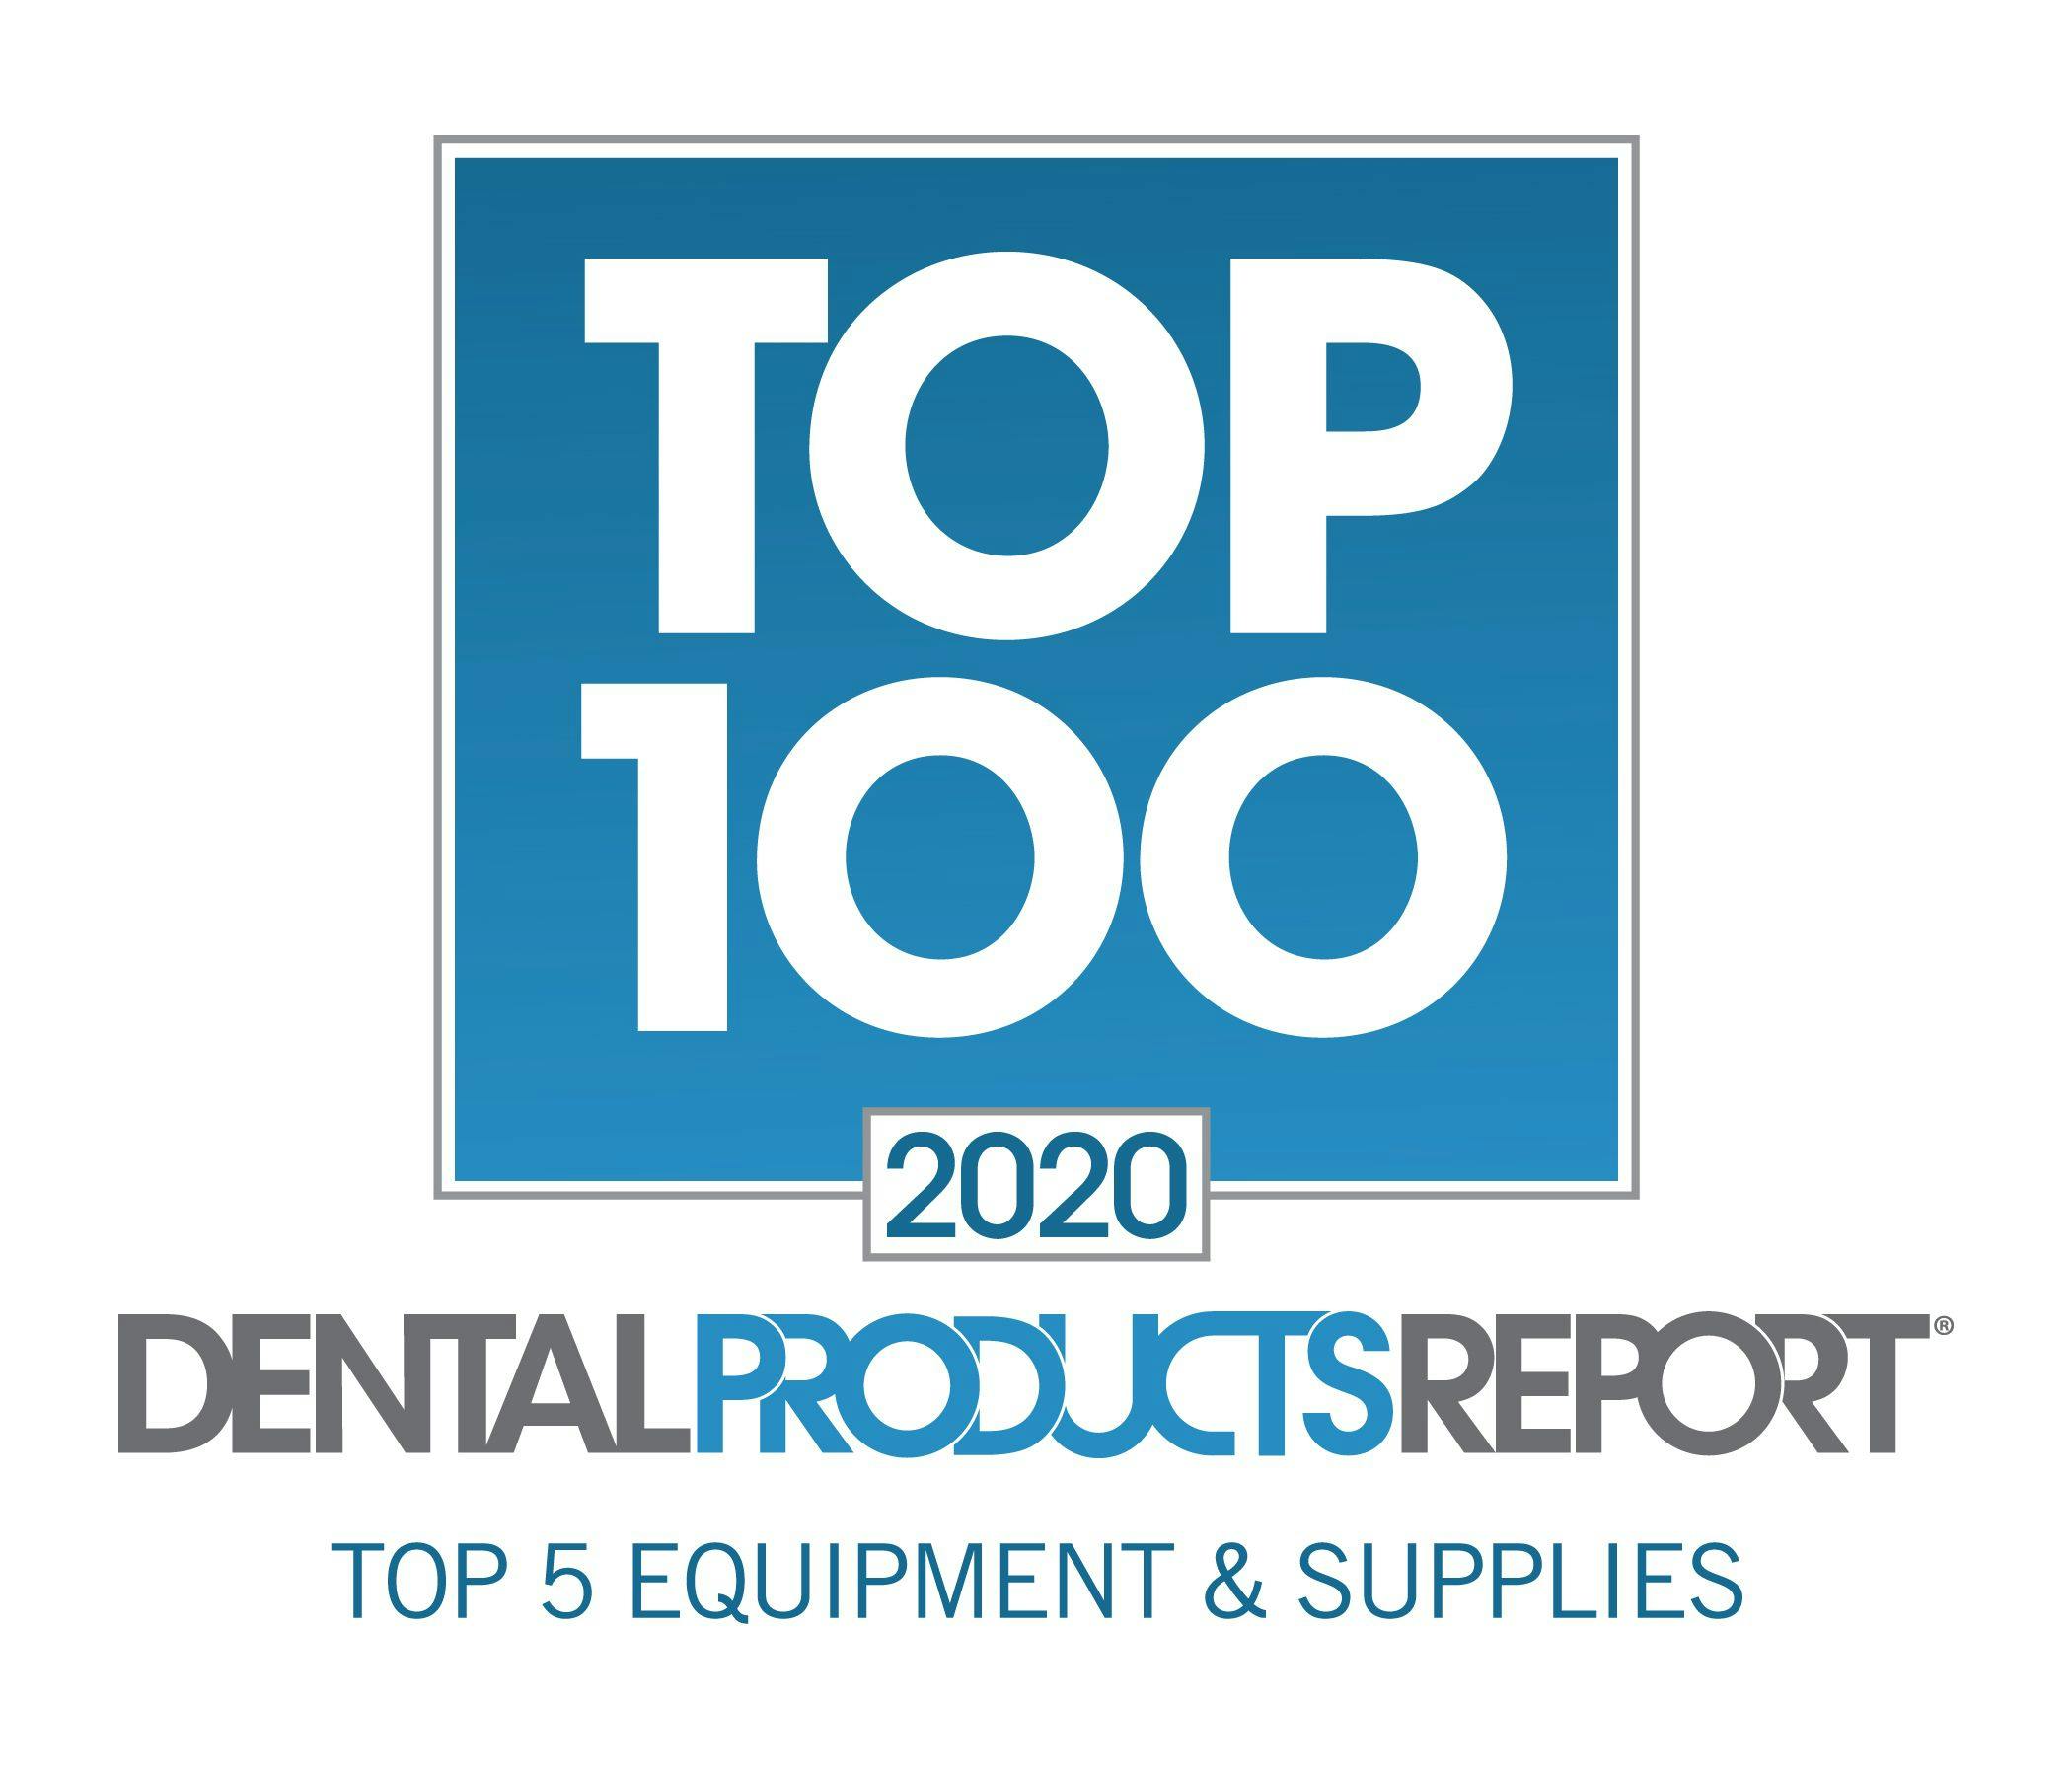 Top 5 Equipment & Supplies of 2020